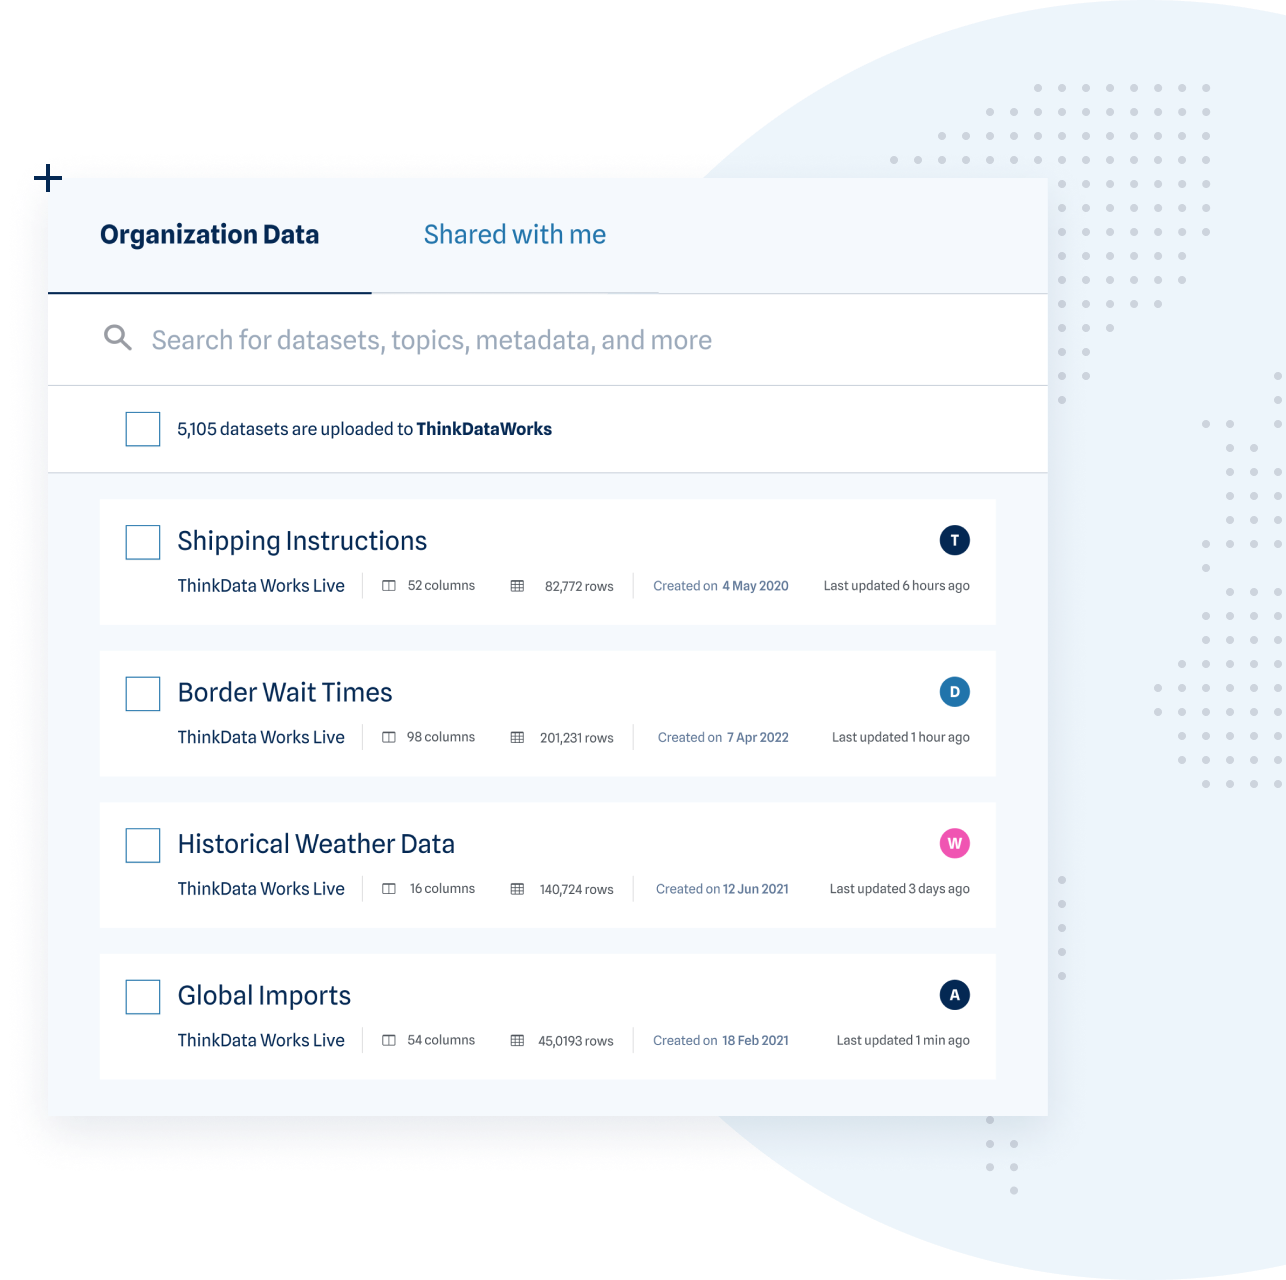 A simplified screenshot of an organization's data catalog on the ThinkData Works Platform